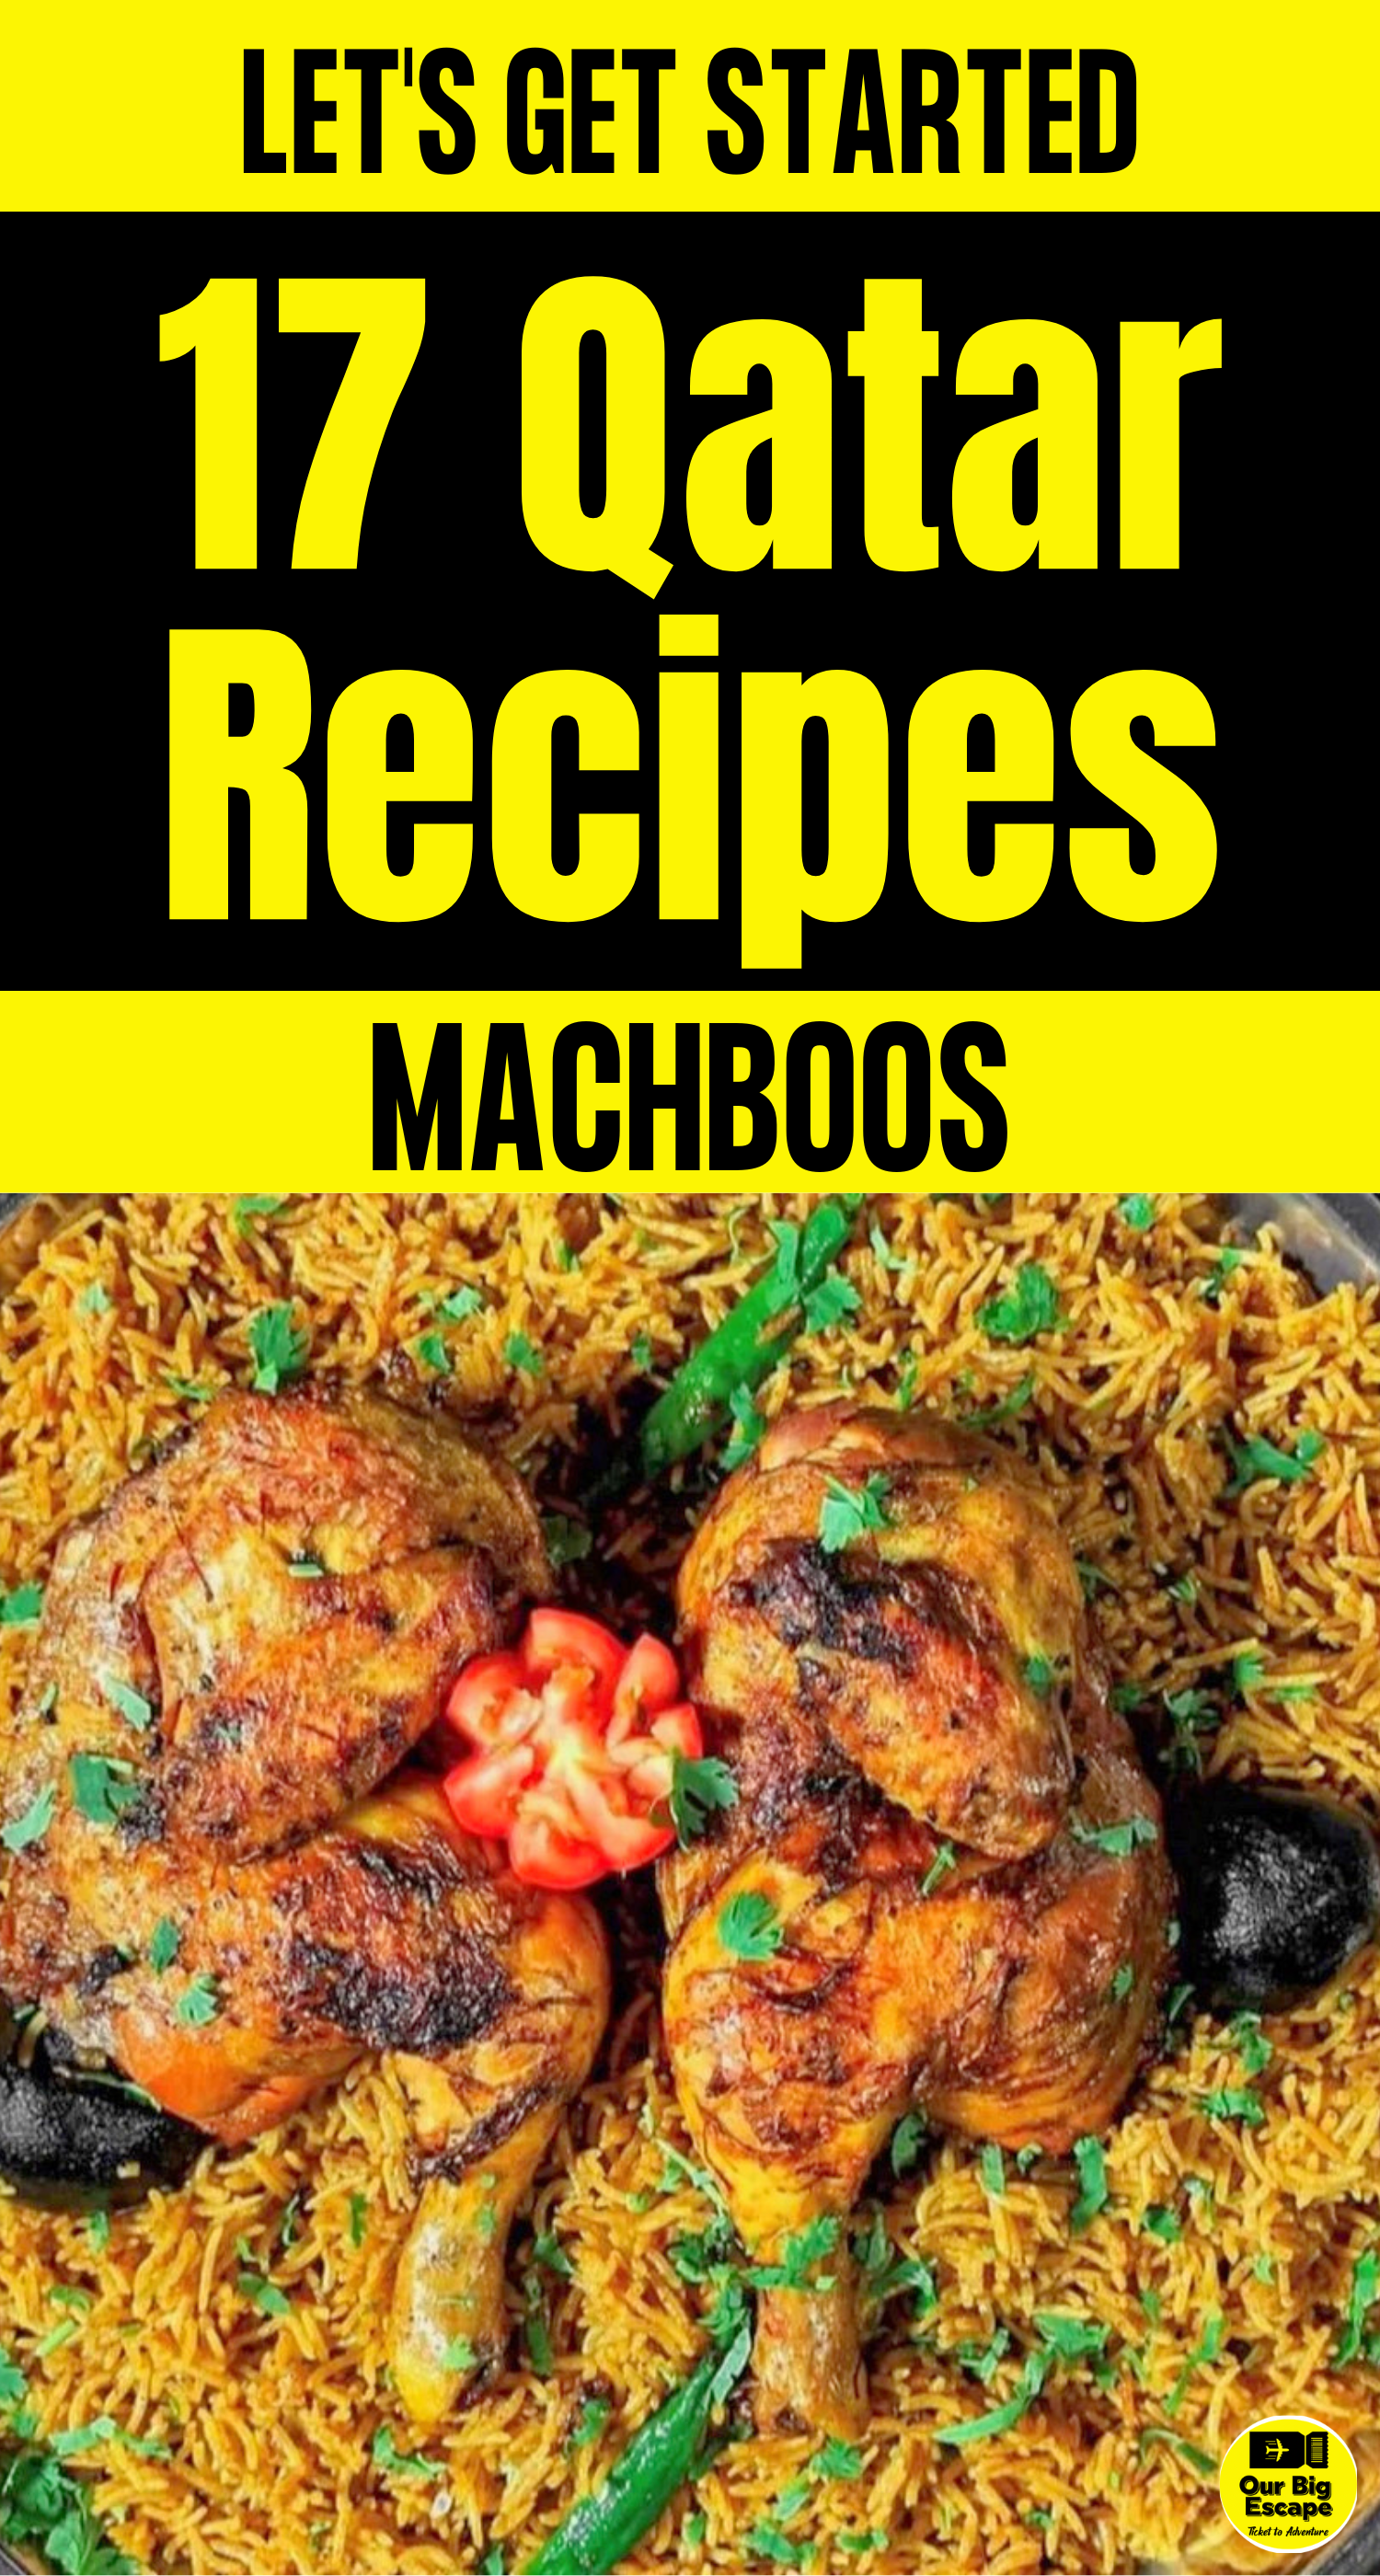 17 Qatar Recipes - Machboos